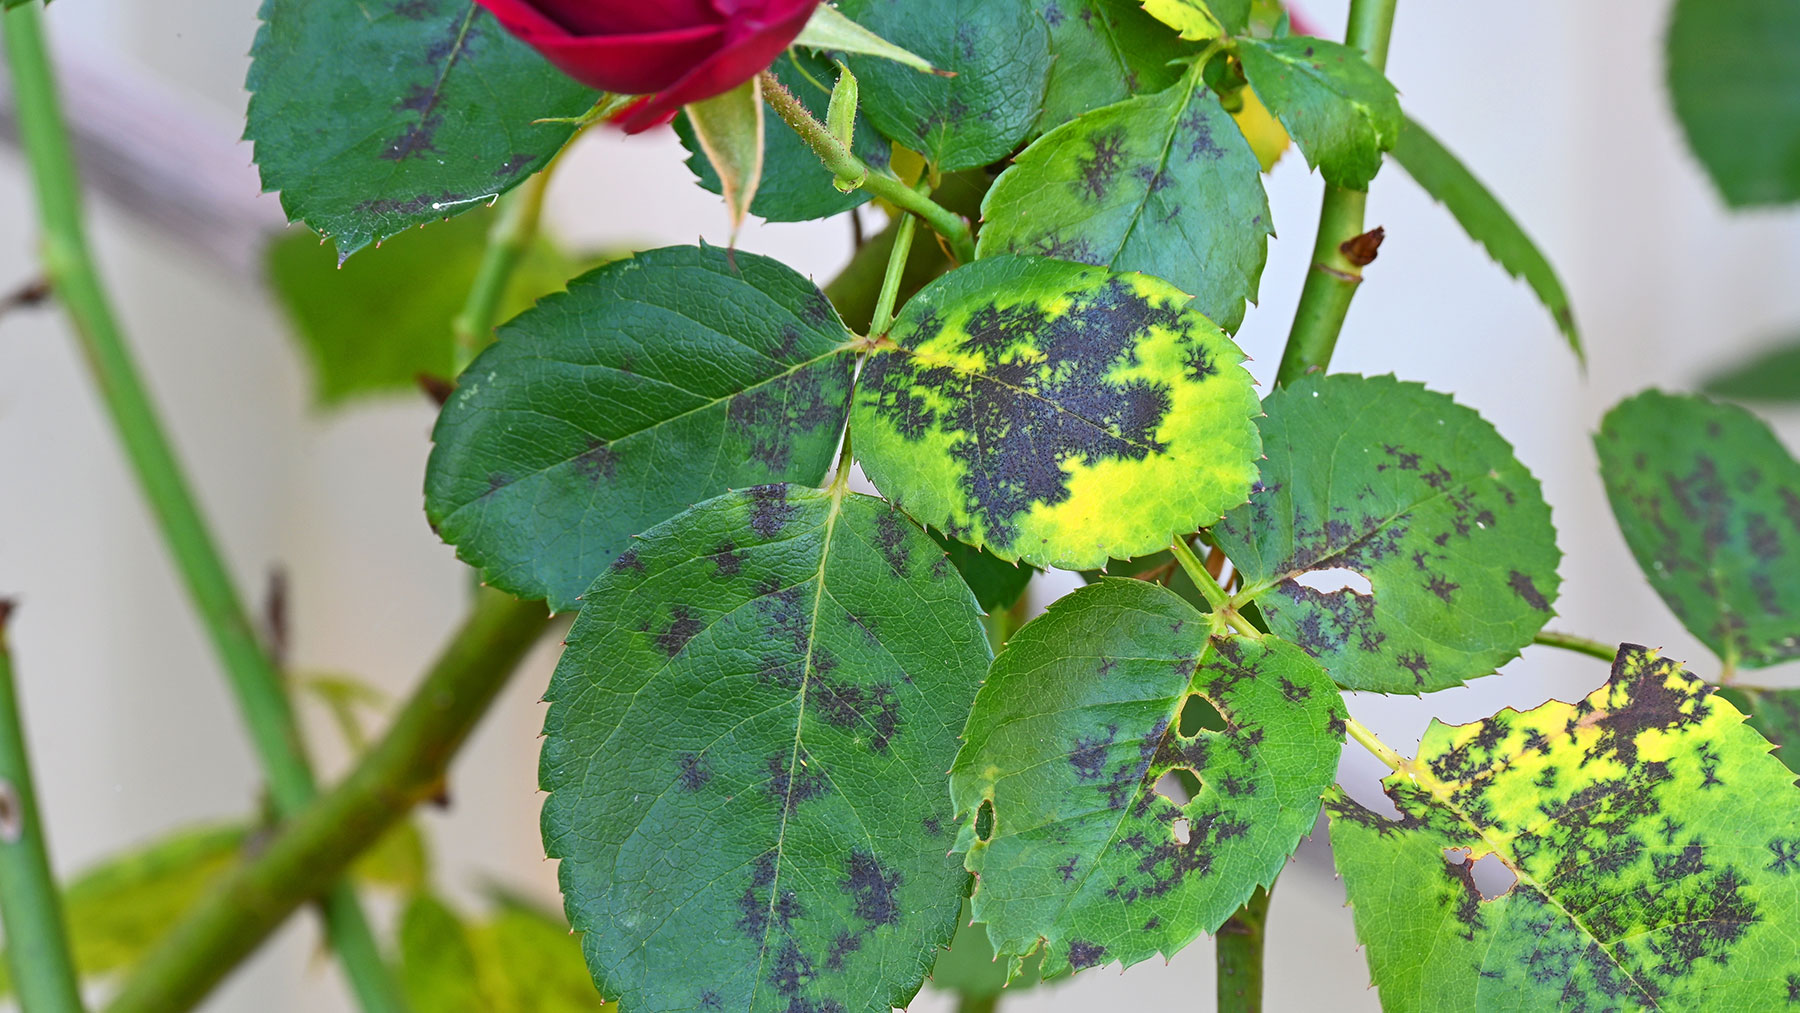 Black spot showing on rose foliage